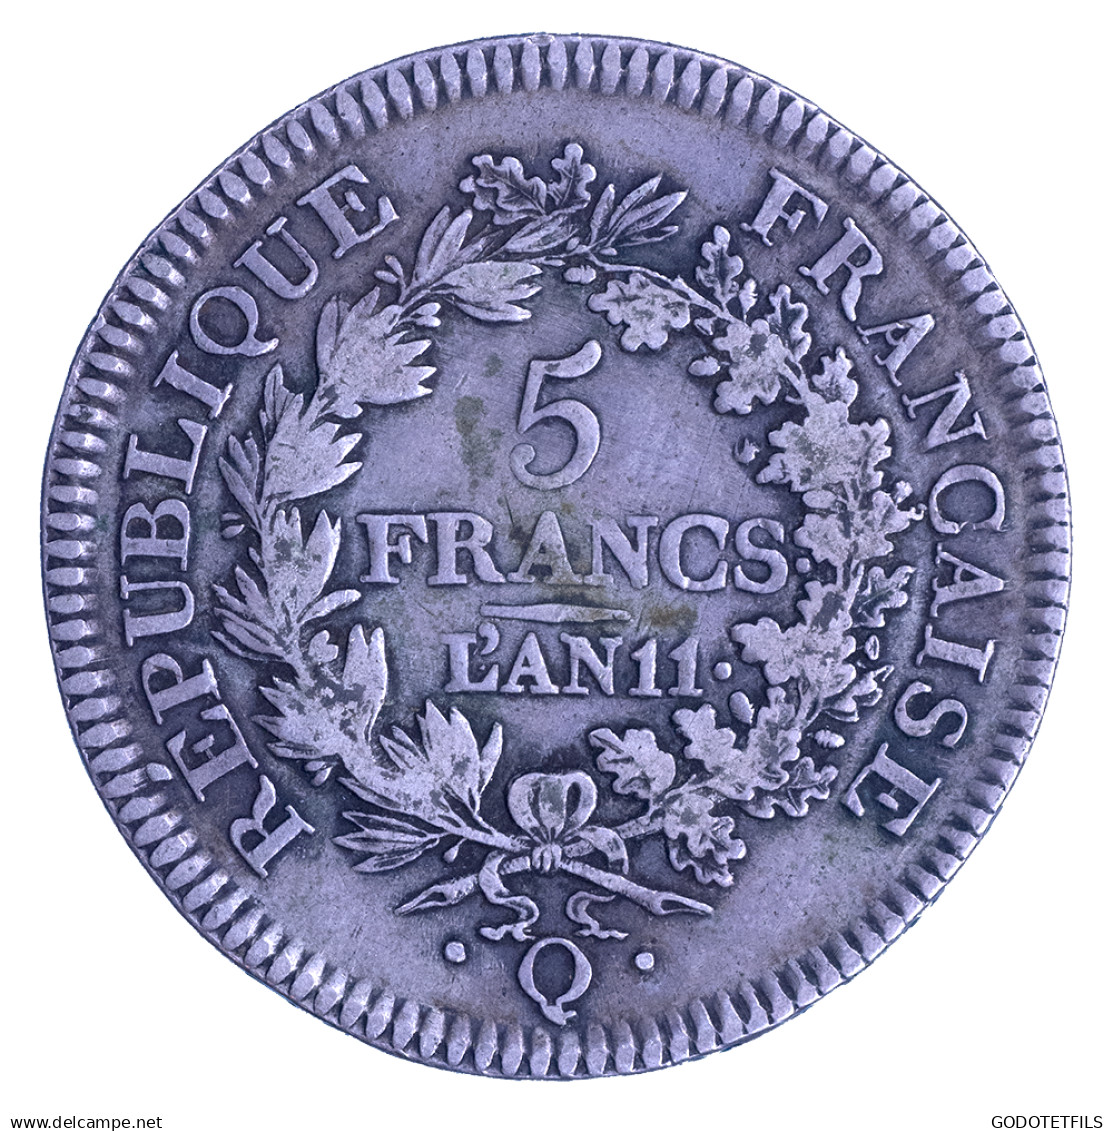 Consulat-Union Et Force 5 Francs An 11 (1803) Perpignan - 5 Francs